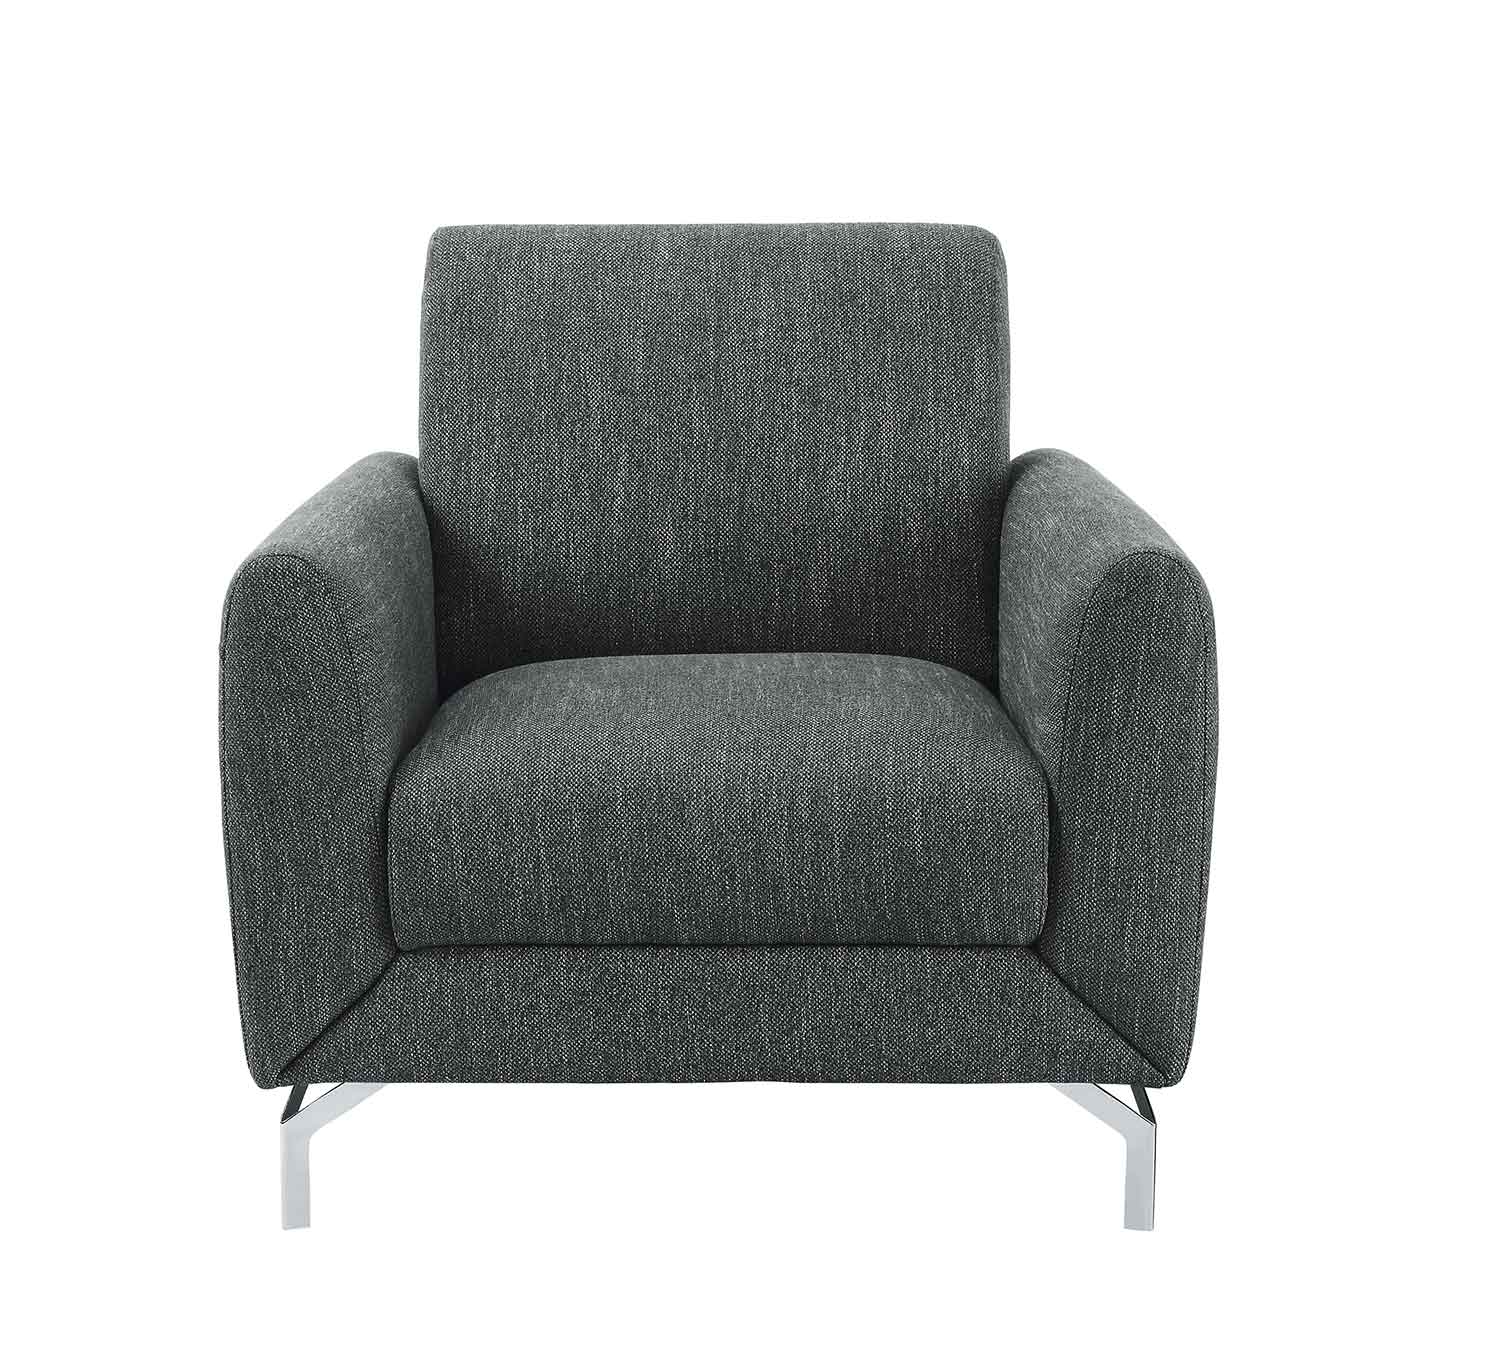 Homelegance Venture Chair - Dark gray